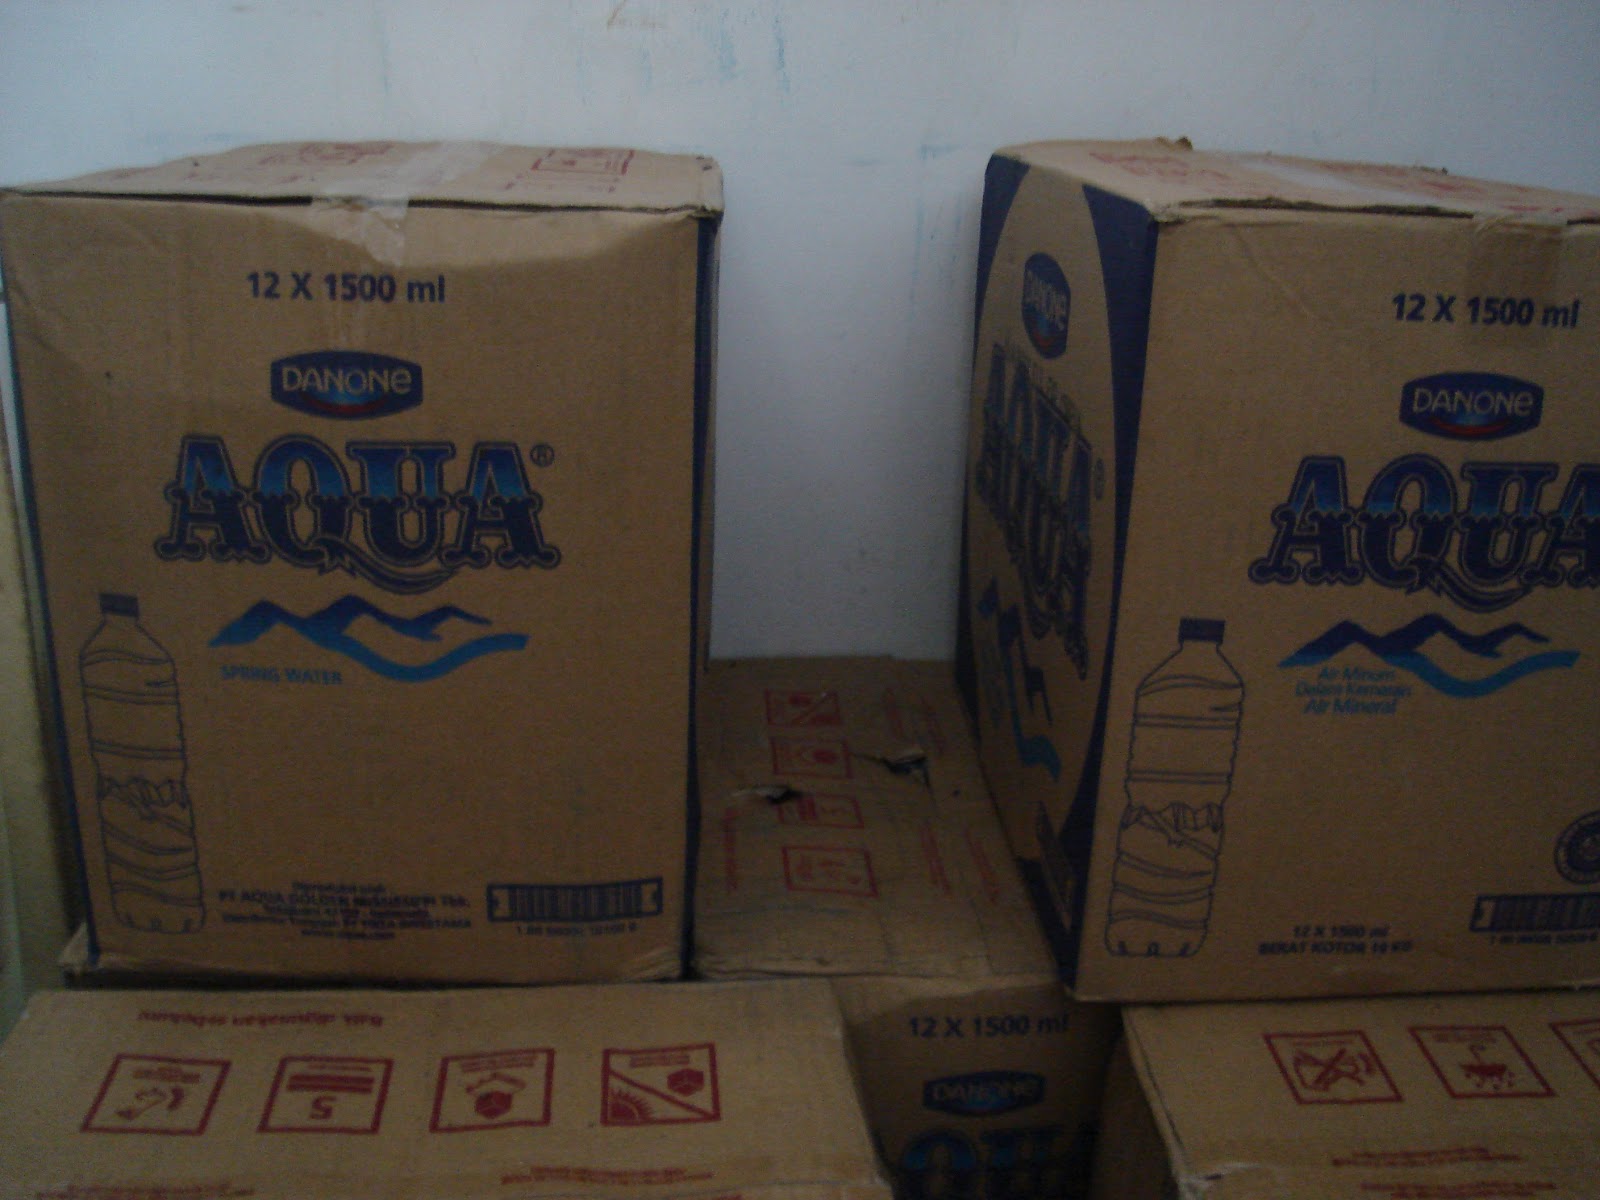 Aqua home service baskoro: Aqua 1500 ml